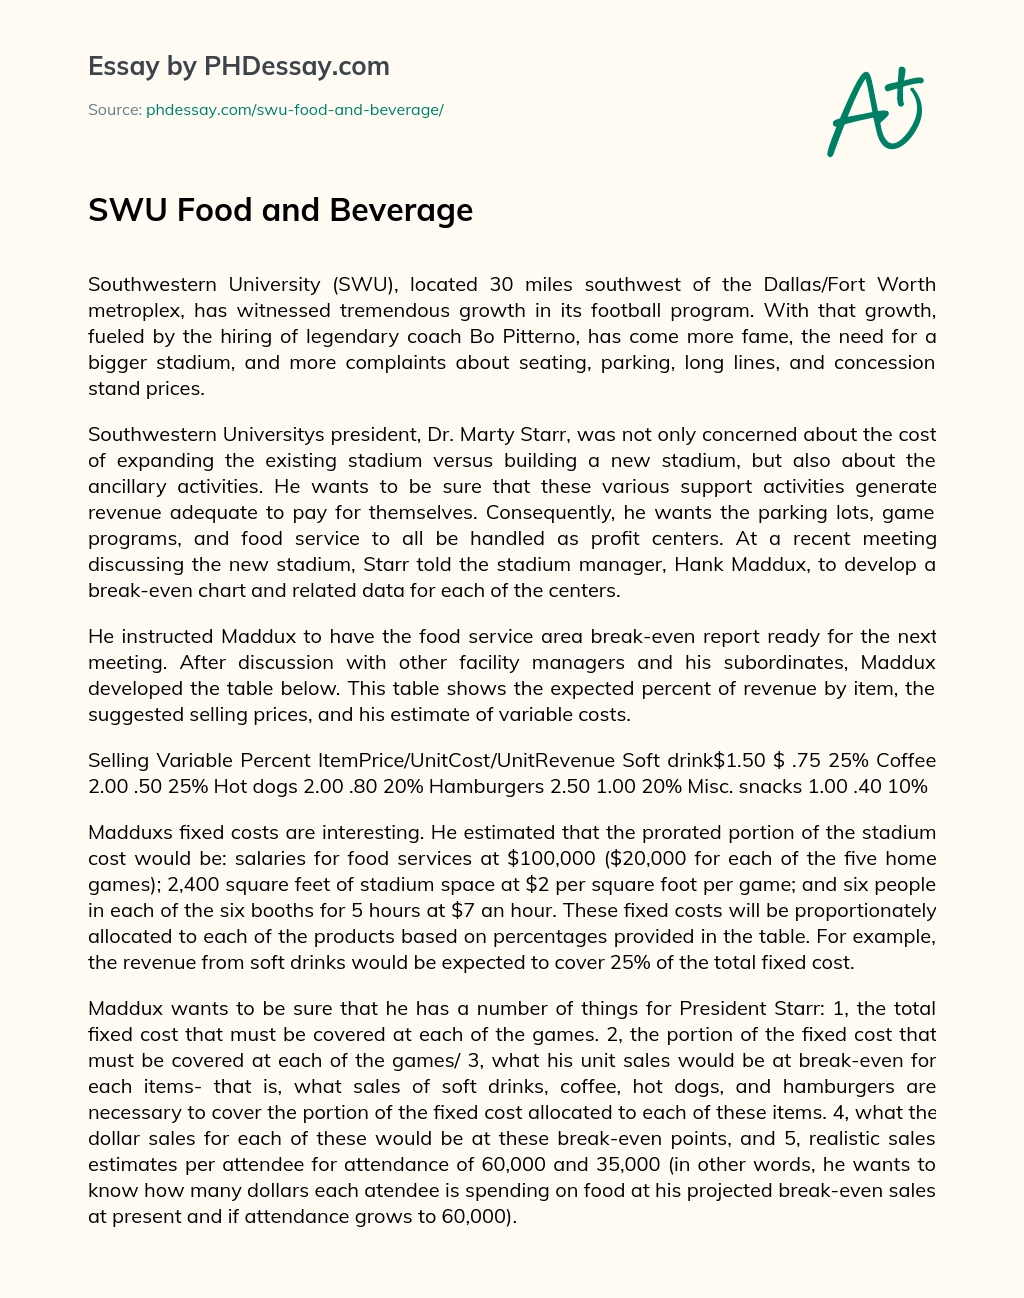 SWU Food and Beverage essay